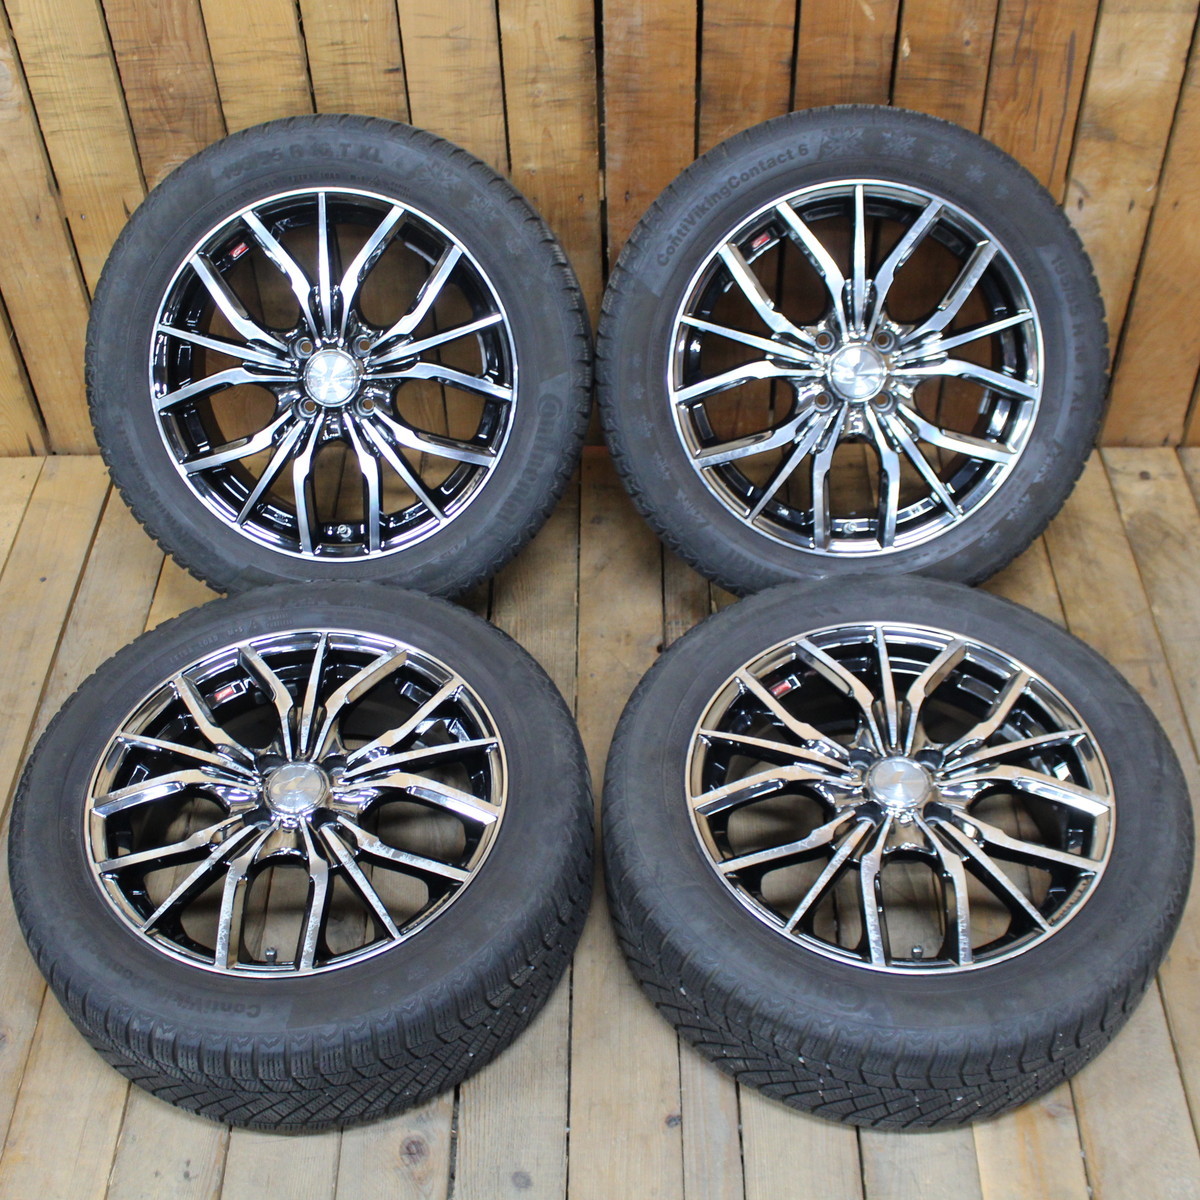  Note March Fielder Tiida Wingroad etc. 16 -inch weds Leonis studdless tires 195/55R16 aluminium wheel 4ps.@SET